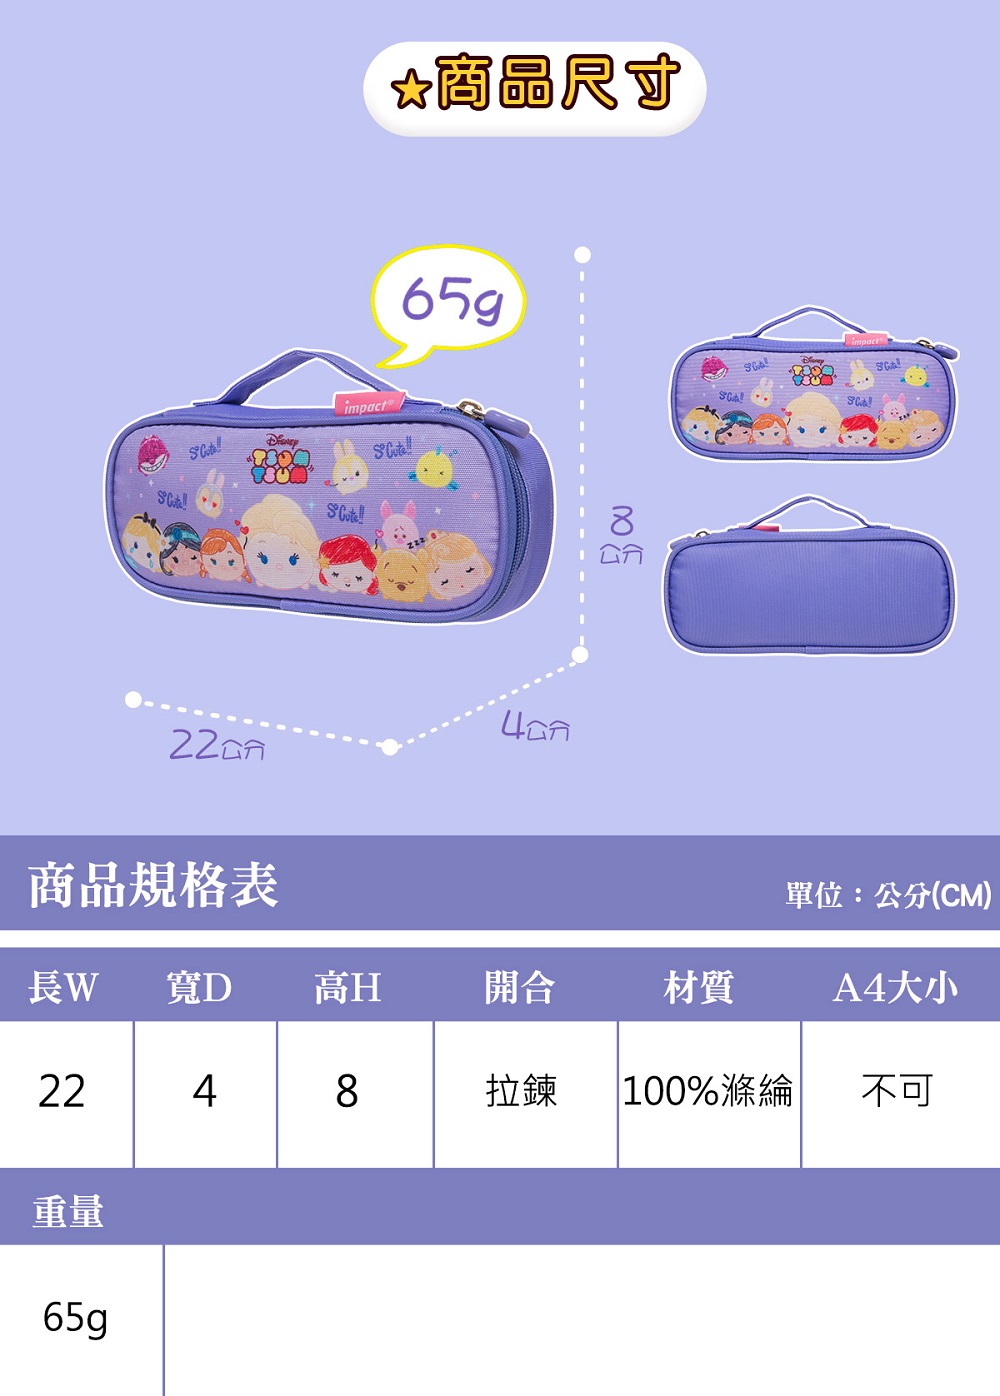 【IMPACT】TsumTsum筆袋-紫色 IMDSL02PL